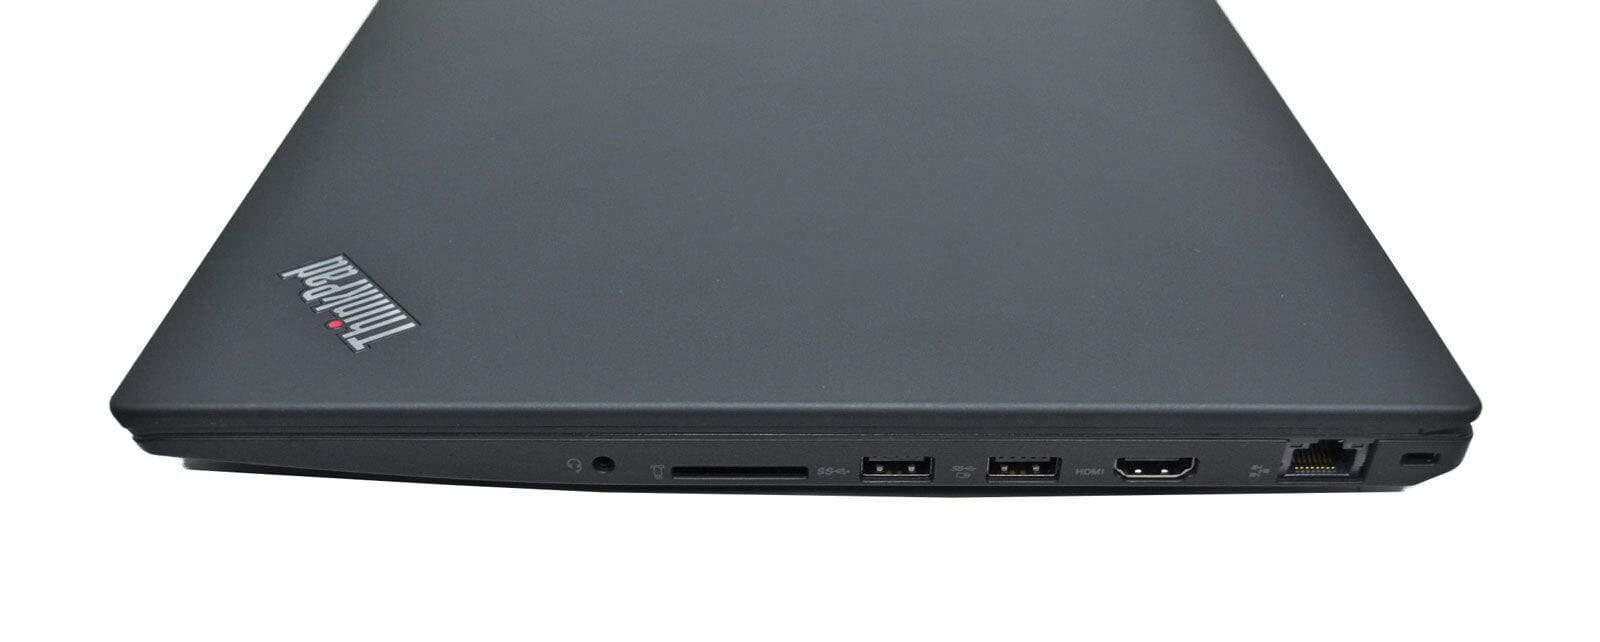 Lenovo ThinkPad P51s Laptop: Core i7-7500U, 16GB RAM, 256GB SSD, Warranty - CruiseTech